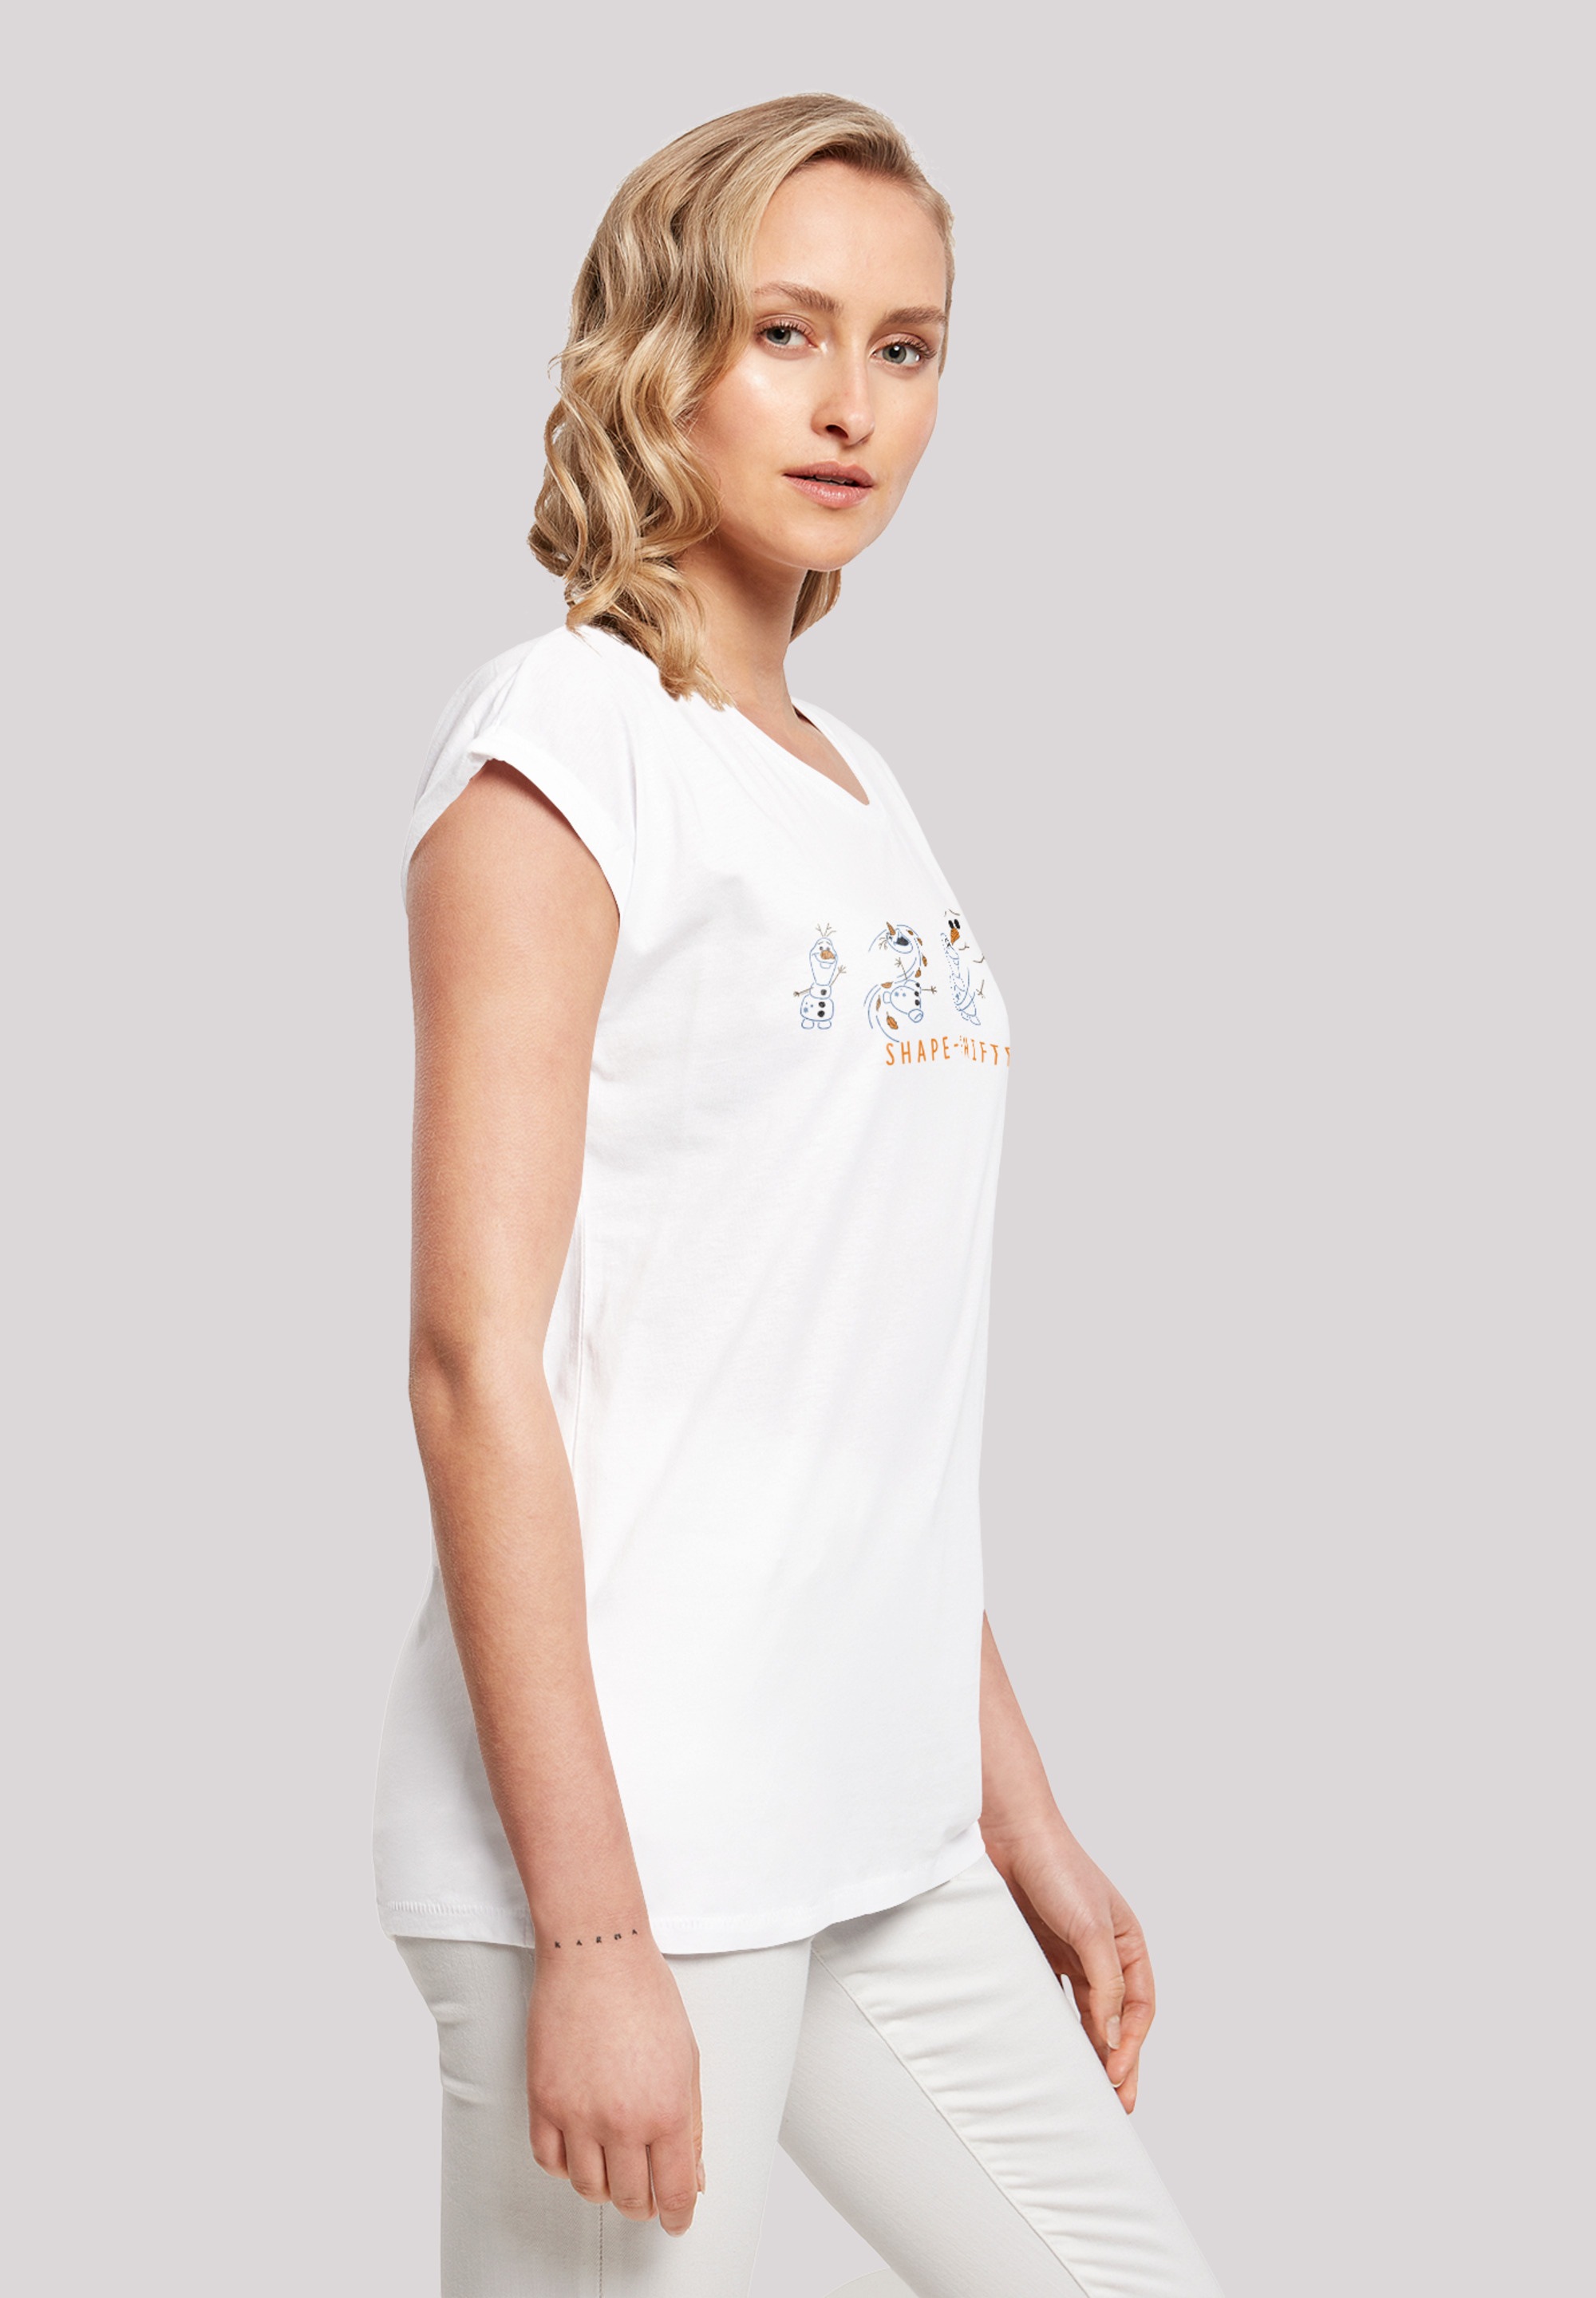 BAUR 2 Print Frozen Shape-Shifter«, F4NT4STIC | T-Shirt für »Disney Olaf bestellen